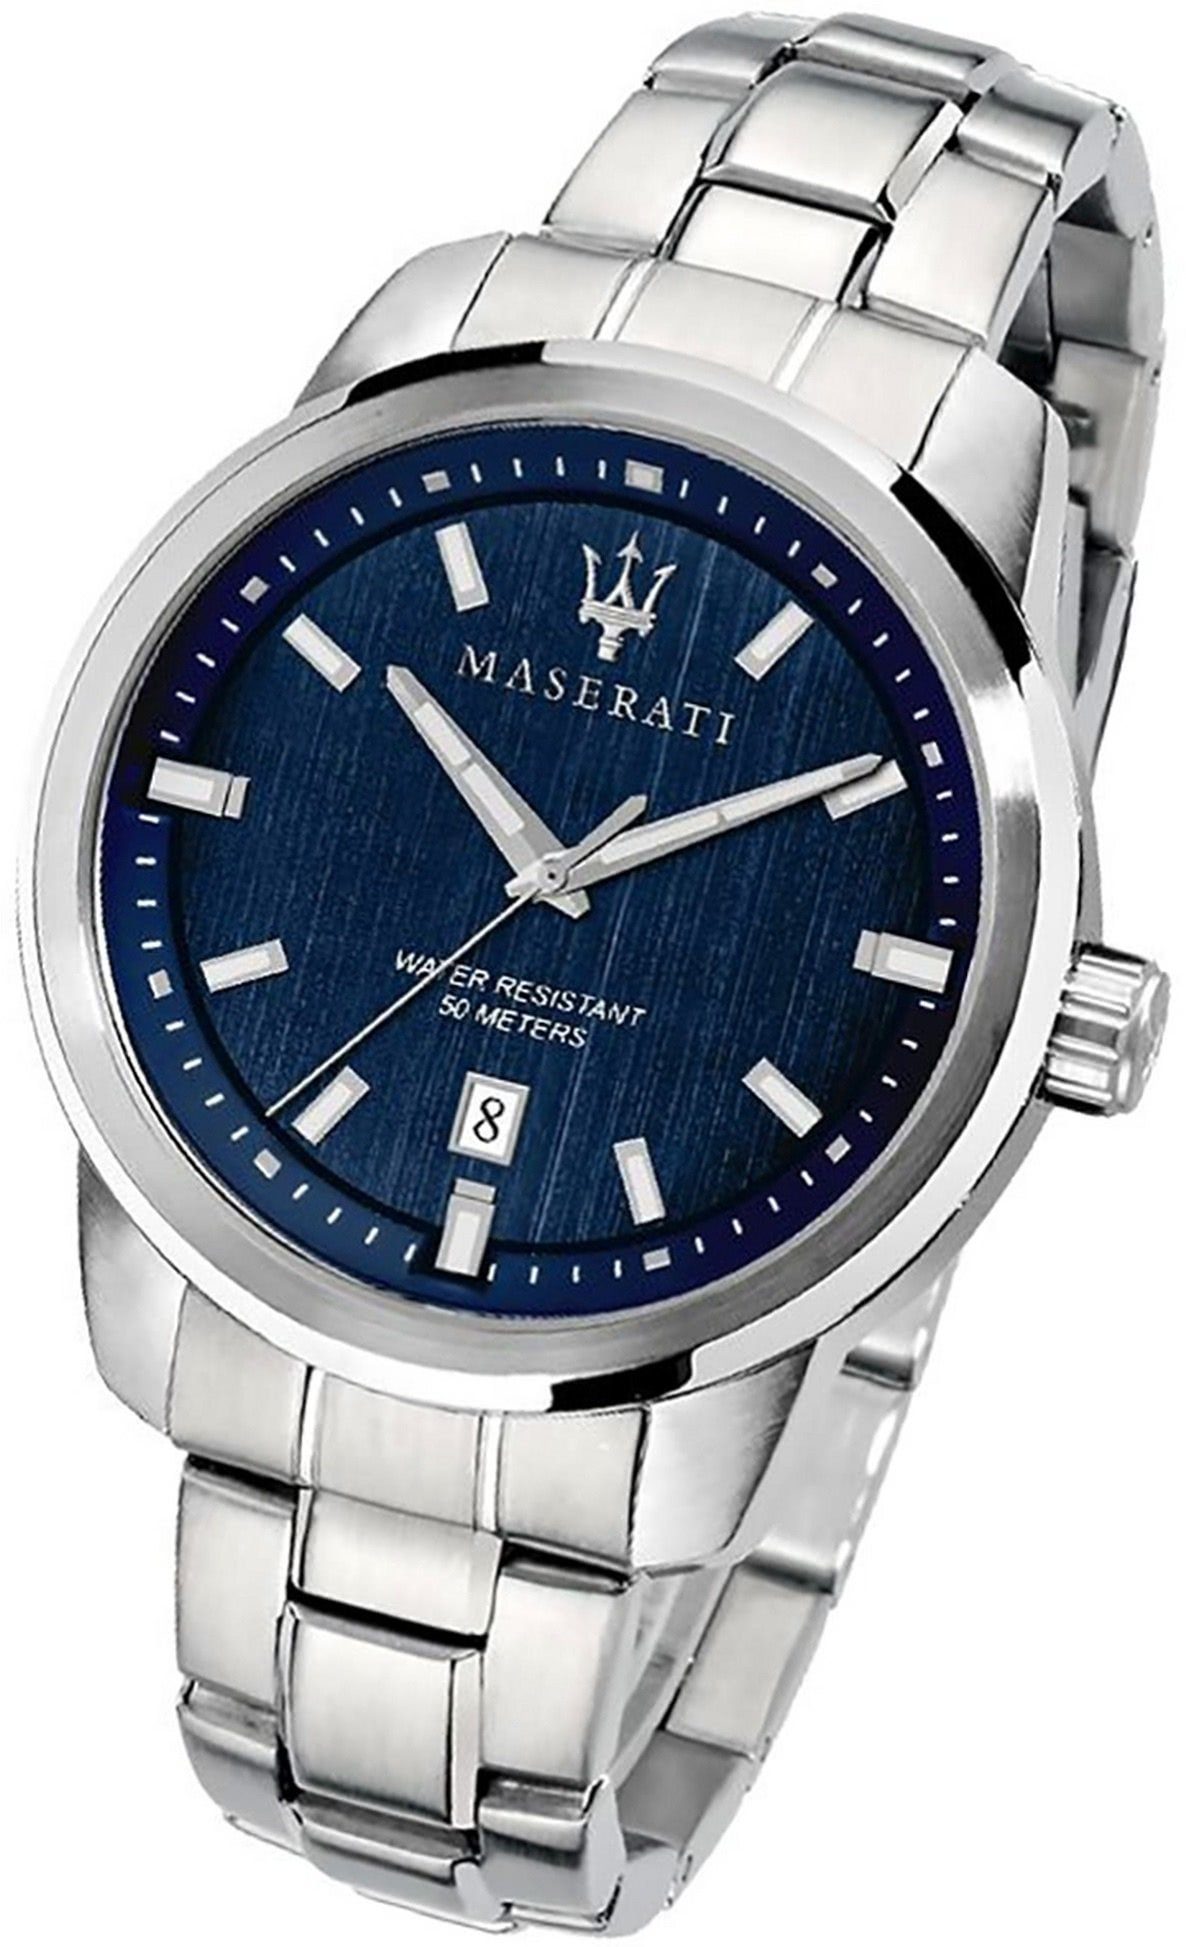 (ca. 52x44mm) Gehäuse, Maserati Armband-Uhr, MASERATI Edelstahl Edelstahlarmband, Quarzuhr Herrenuhr blau rundes groß